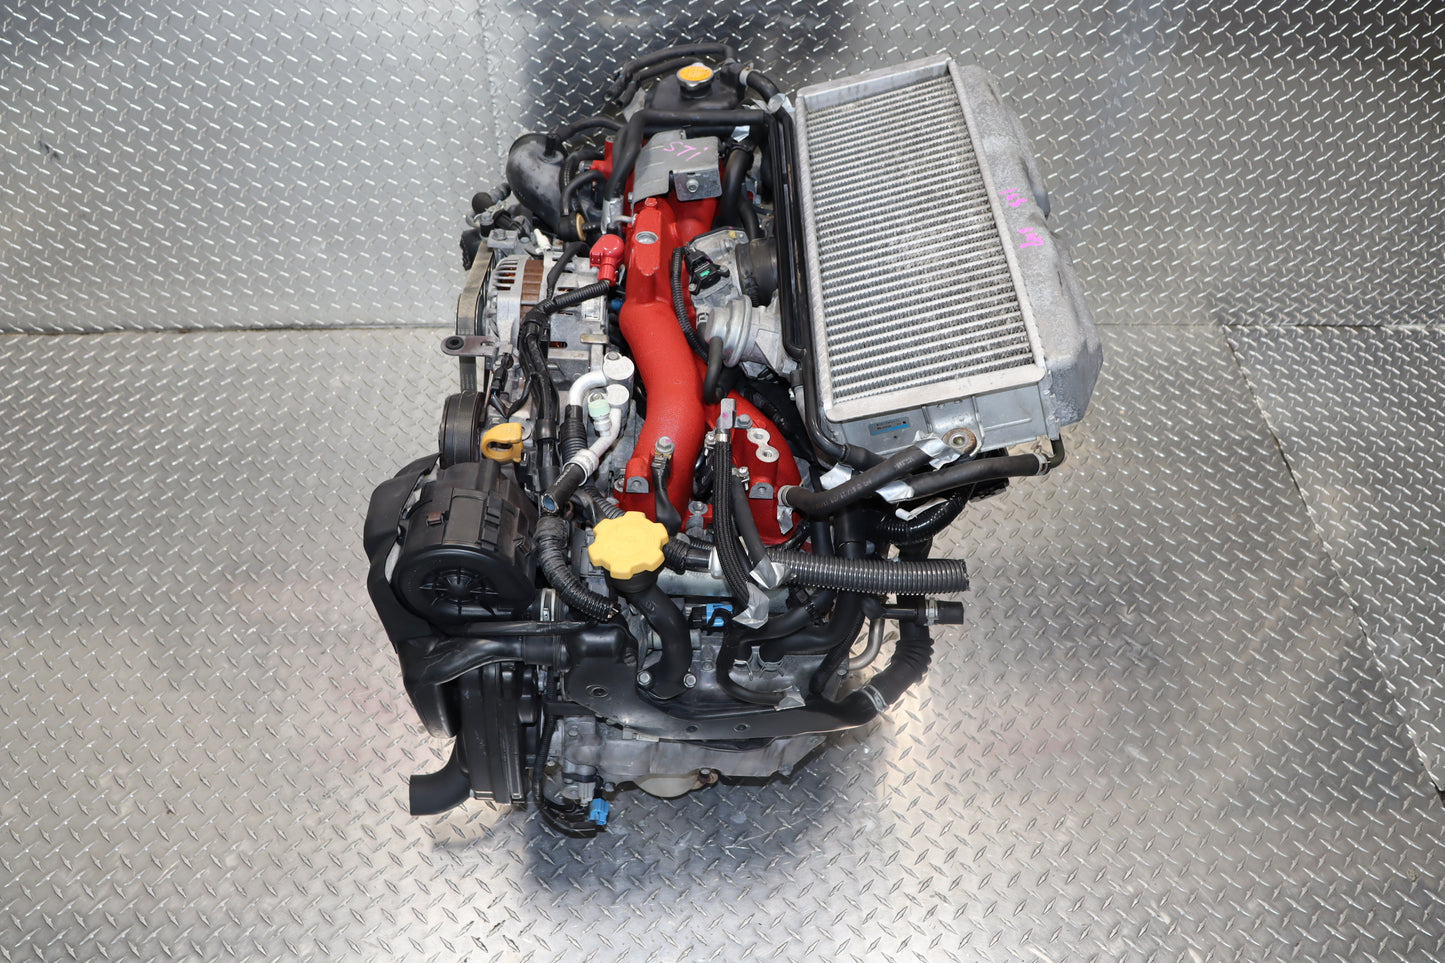 JDM EJ257 SUBARU WRX STI 2008 - 2014 MOTOR TURBO V10 AVCS BOXER ENGINE